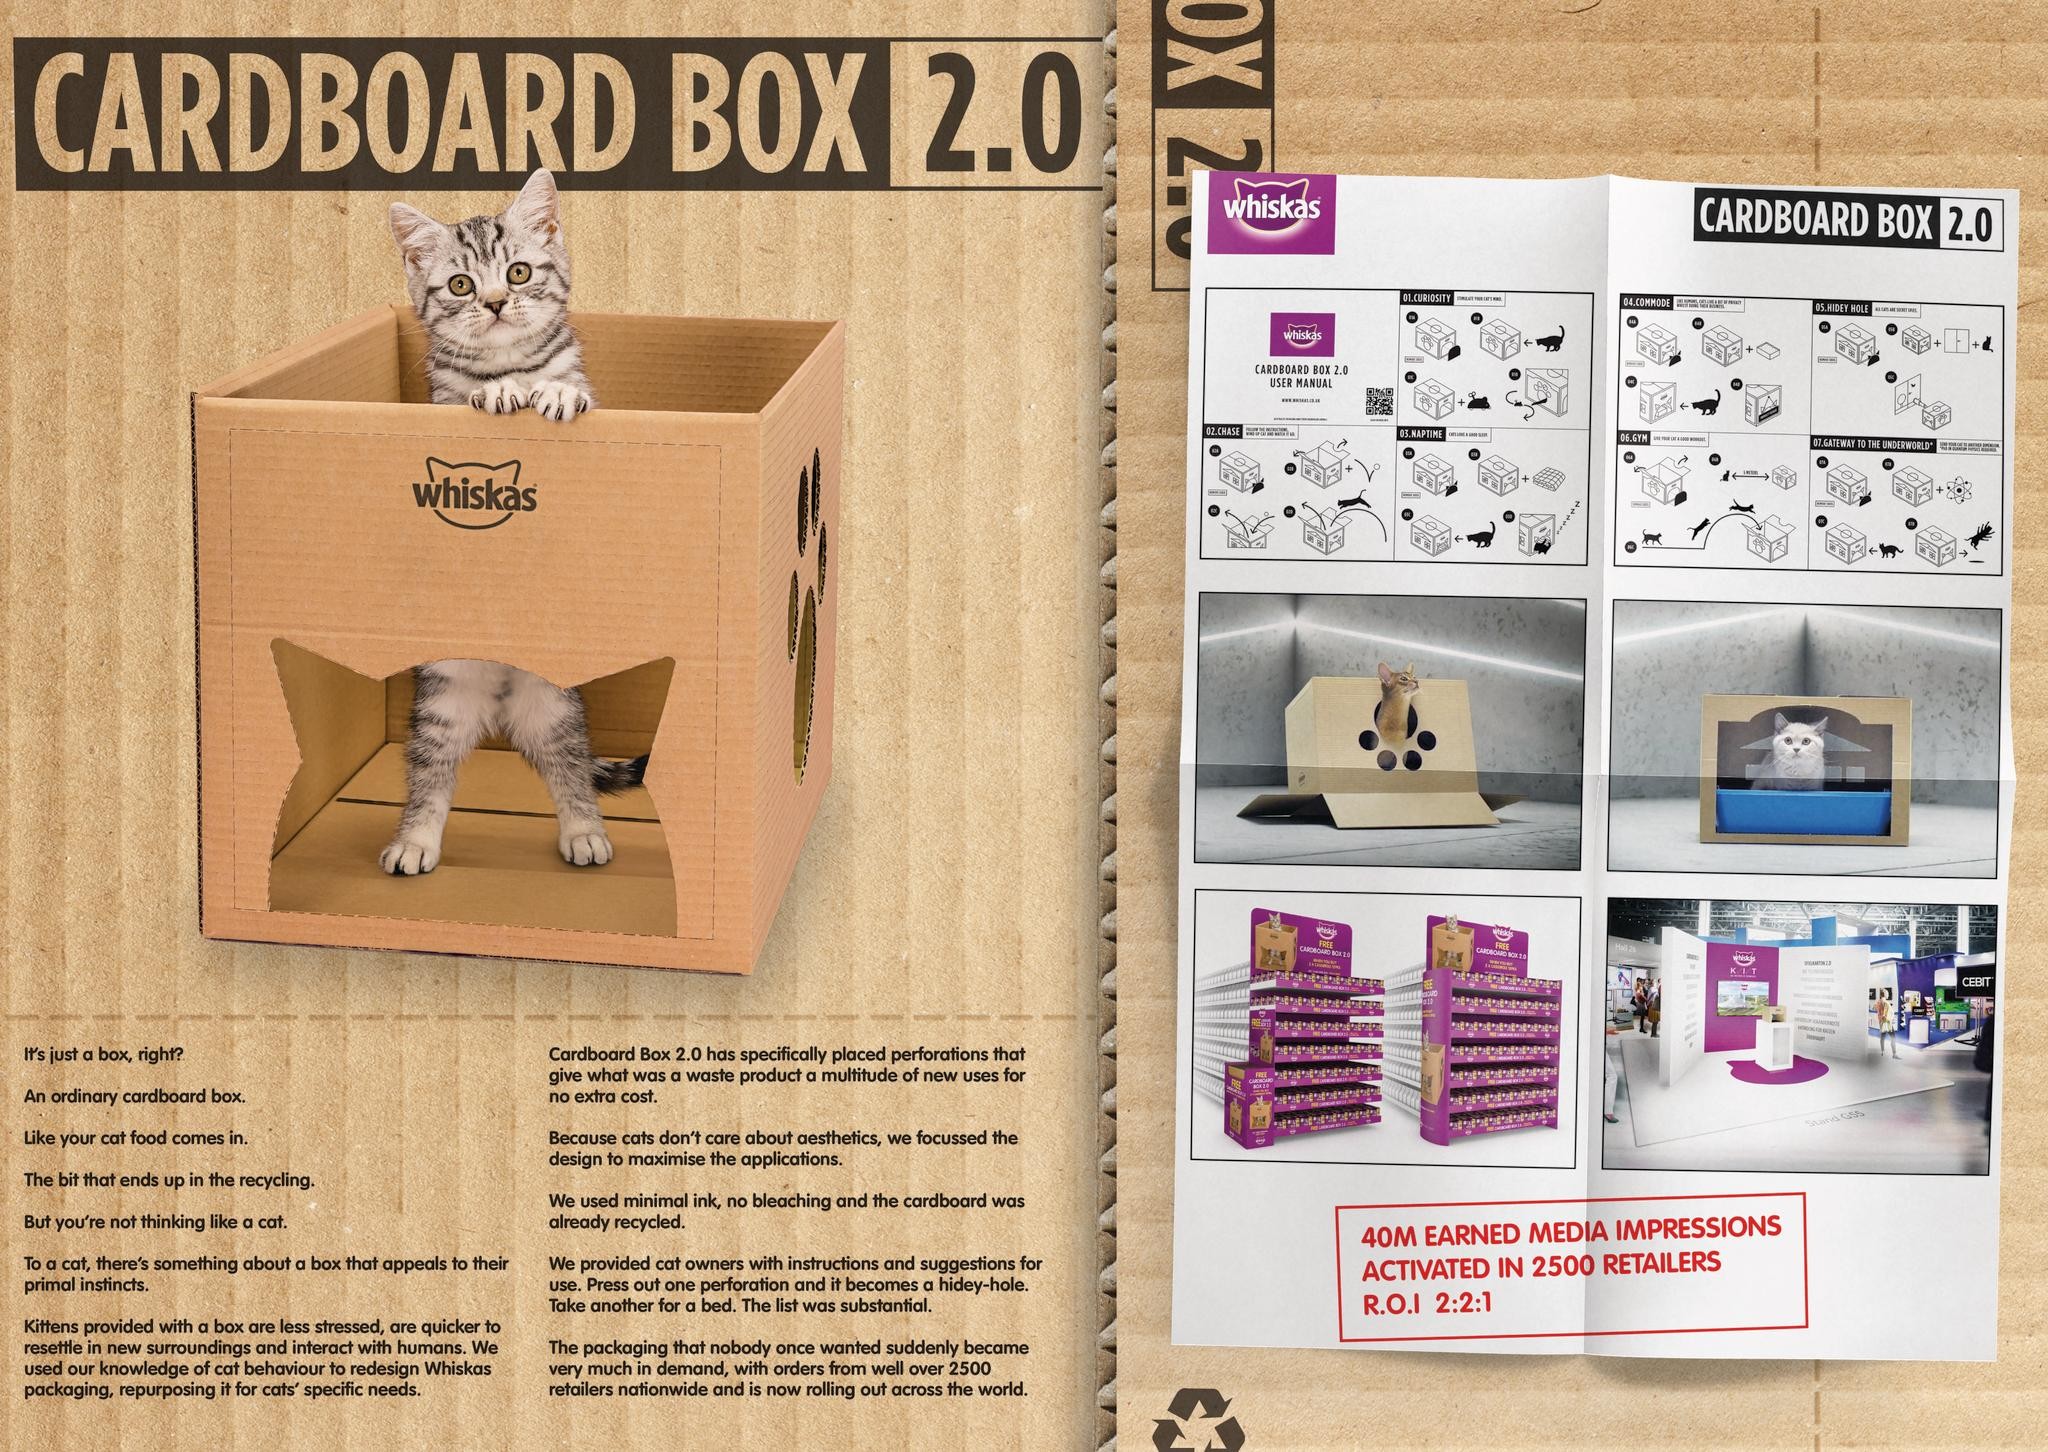 Cardboard Box 2.0